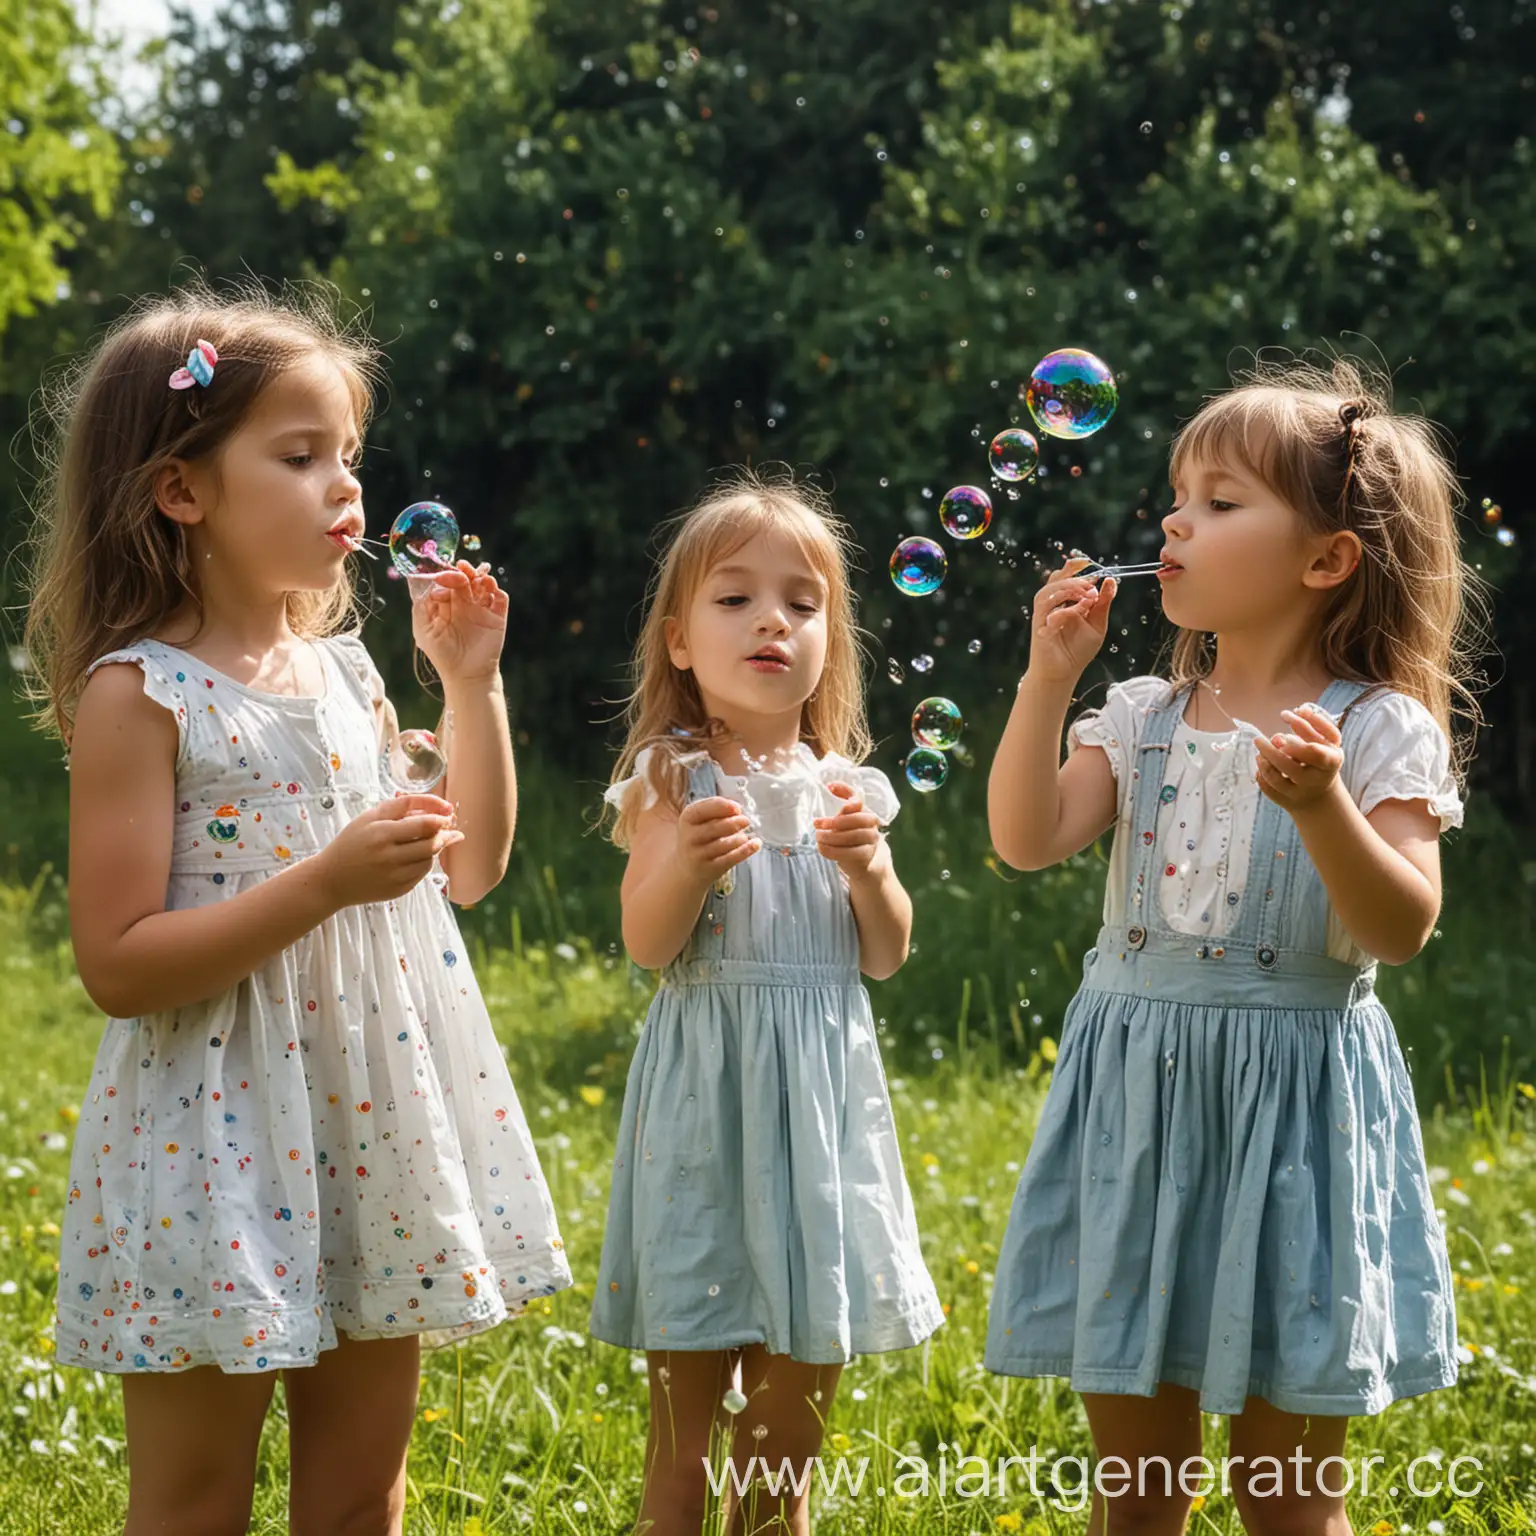 Joyful-Kids-Blowing-Colorful-Soap-Bubbles-Outdoors